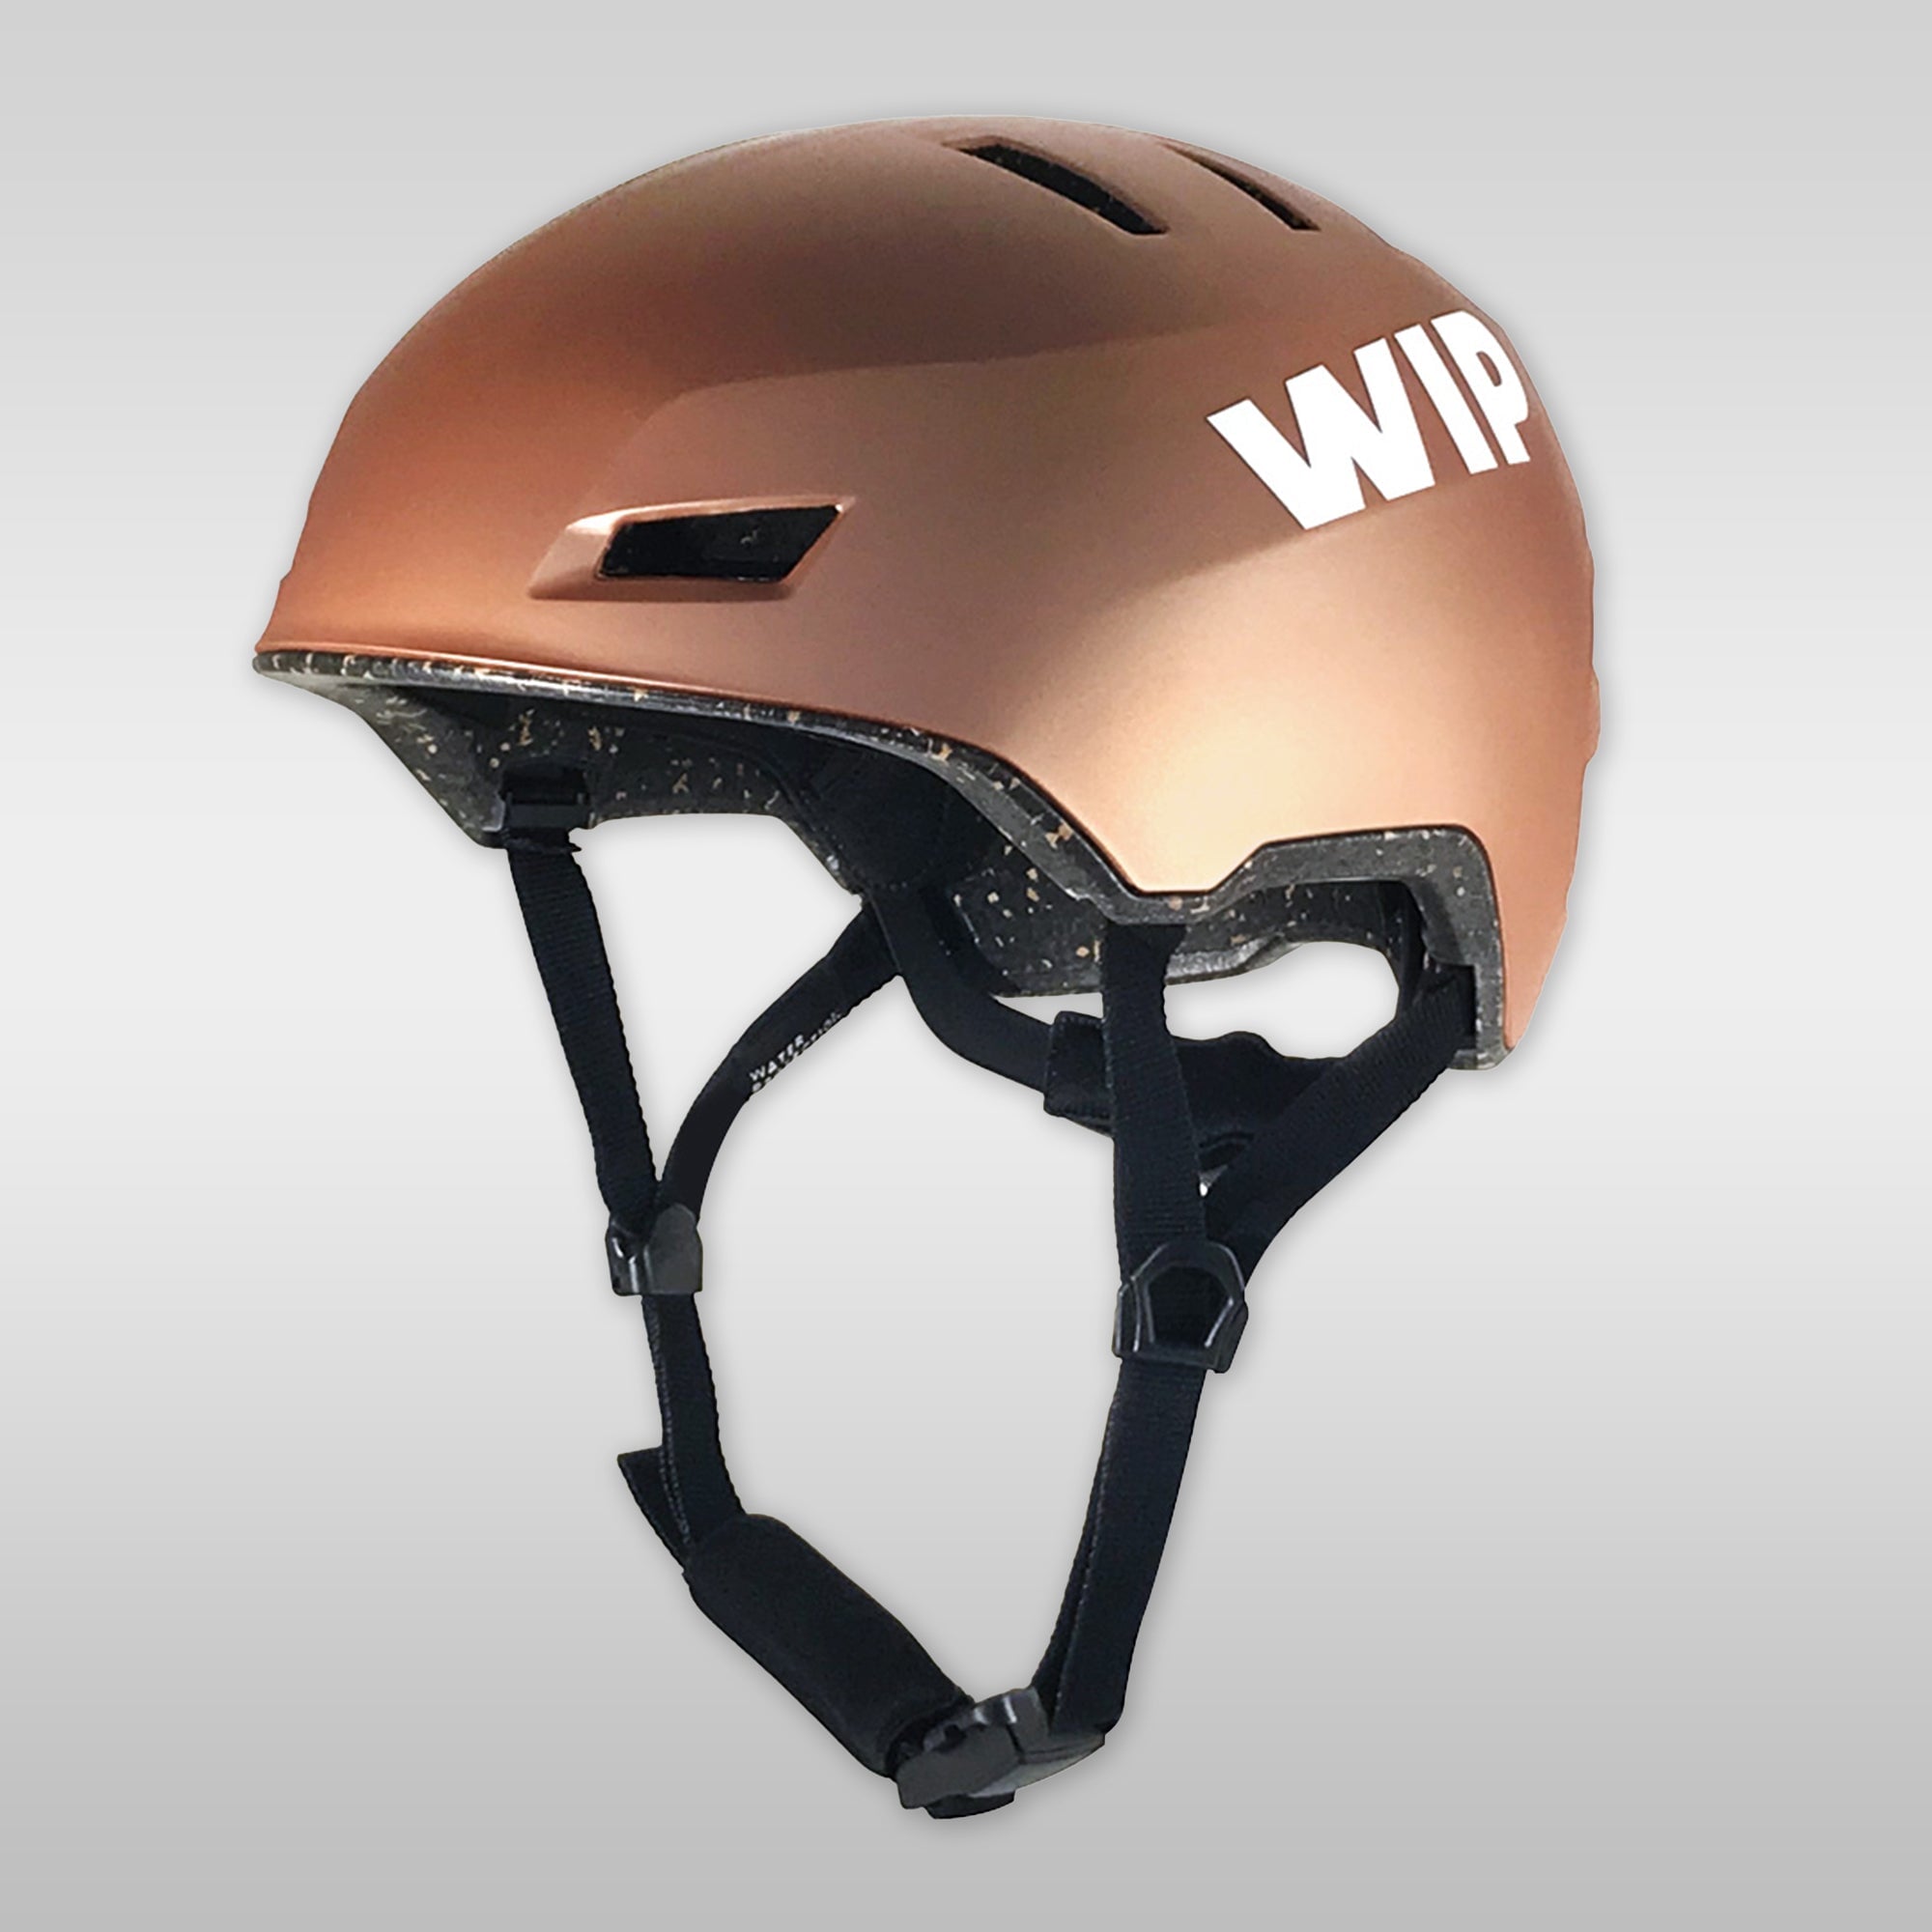 WIP Fordward Watersports windsurfing wingfoil Helmet Prowip 2.0